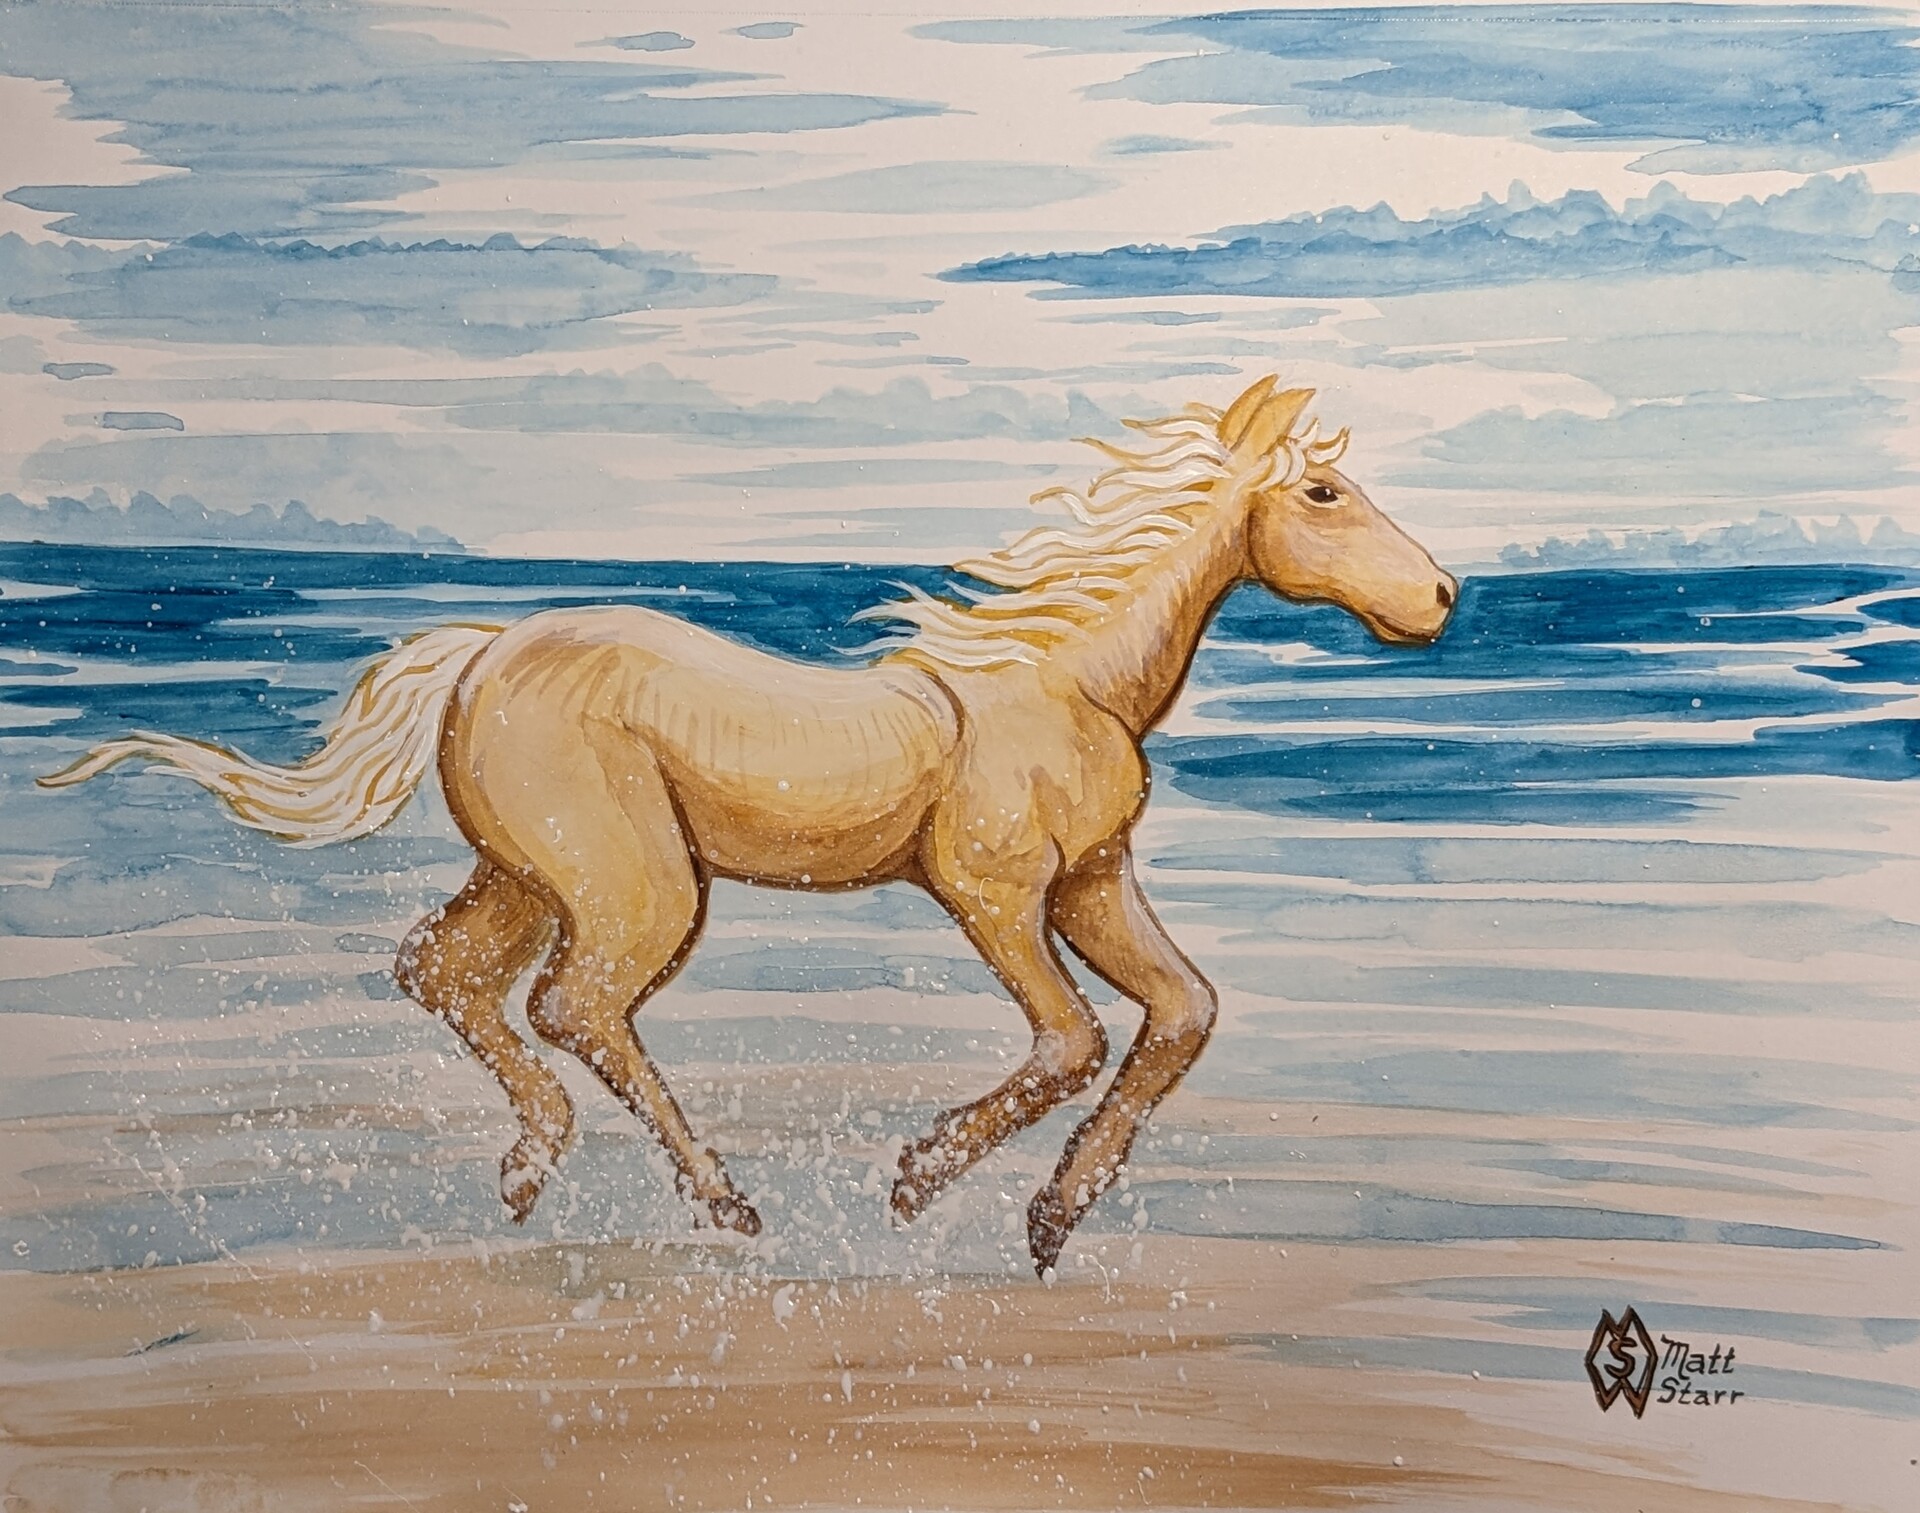 horse running on the beach